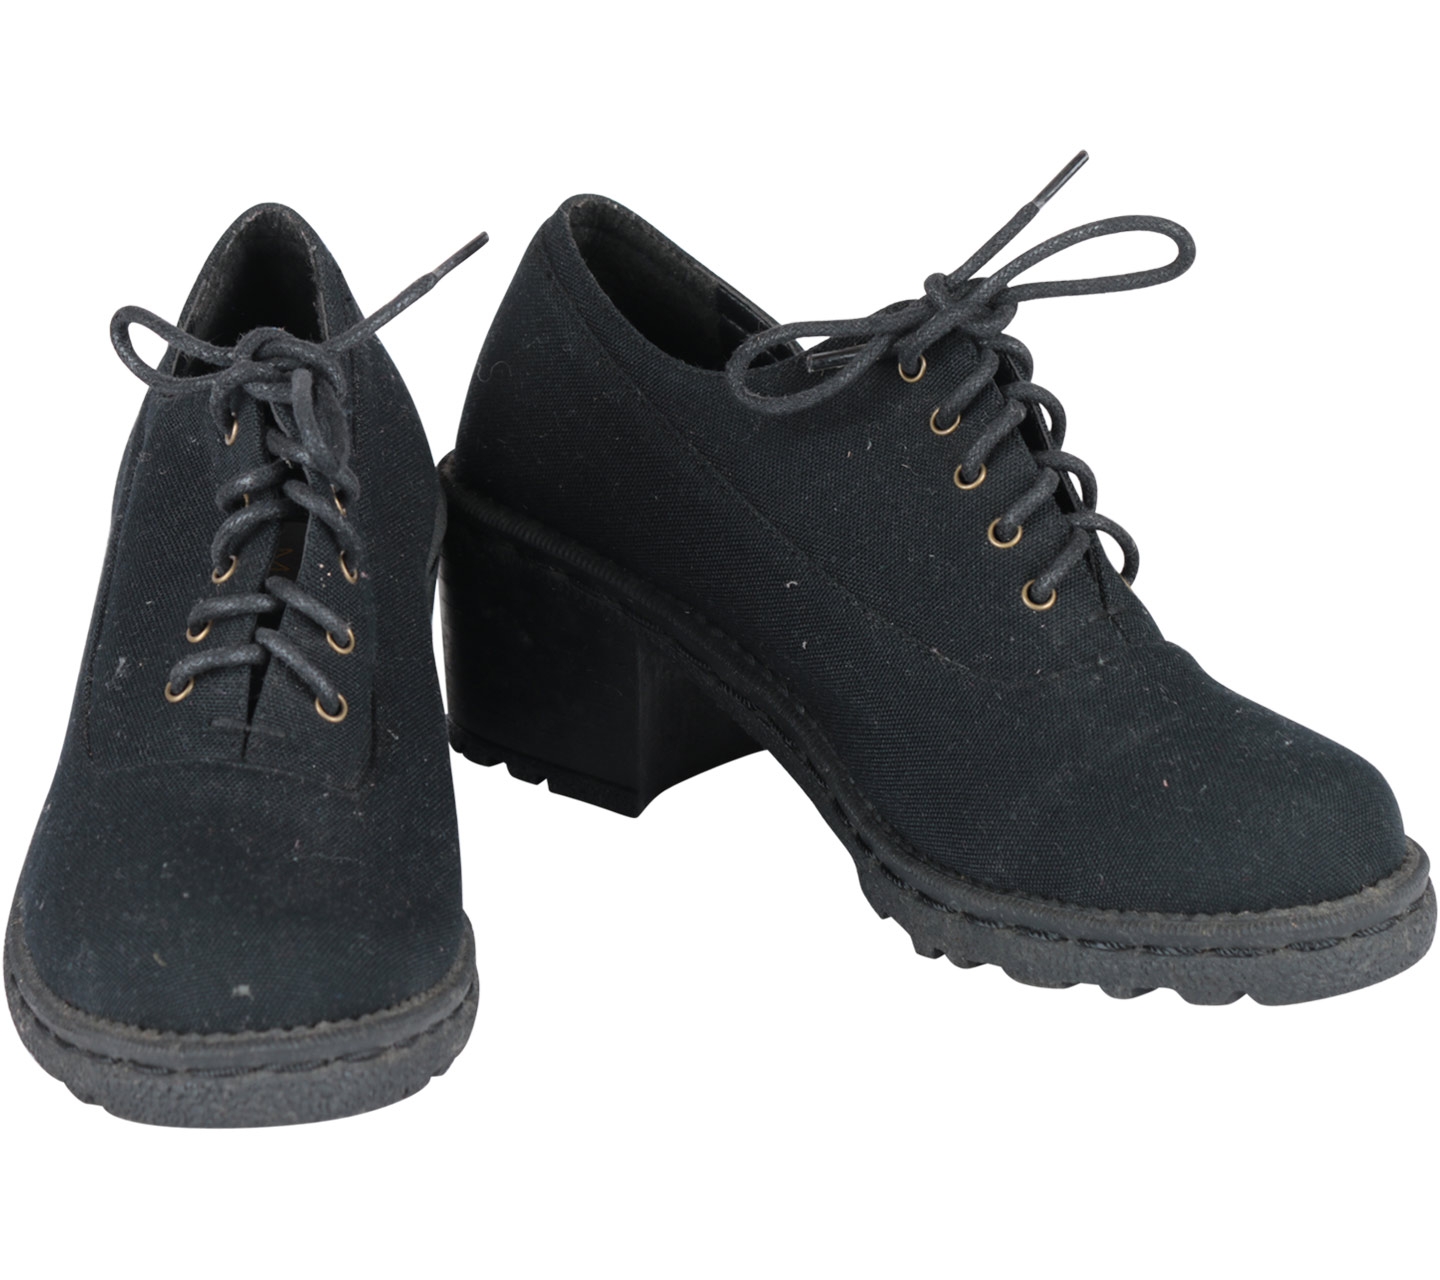 MKS' Black Boots